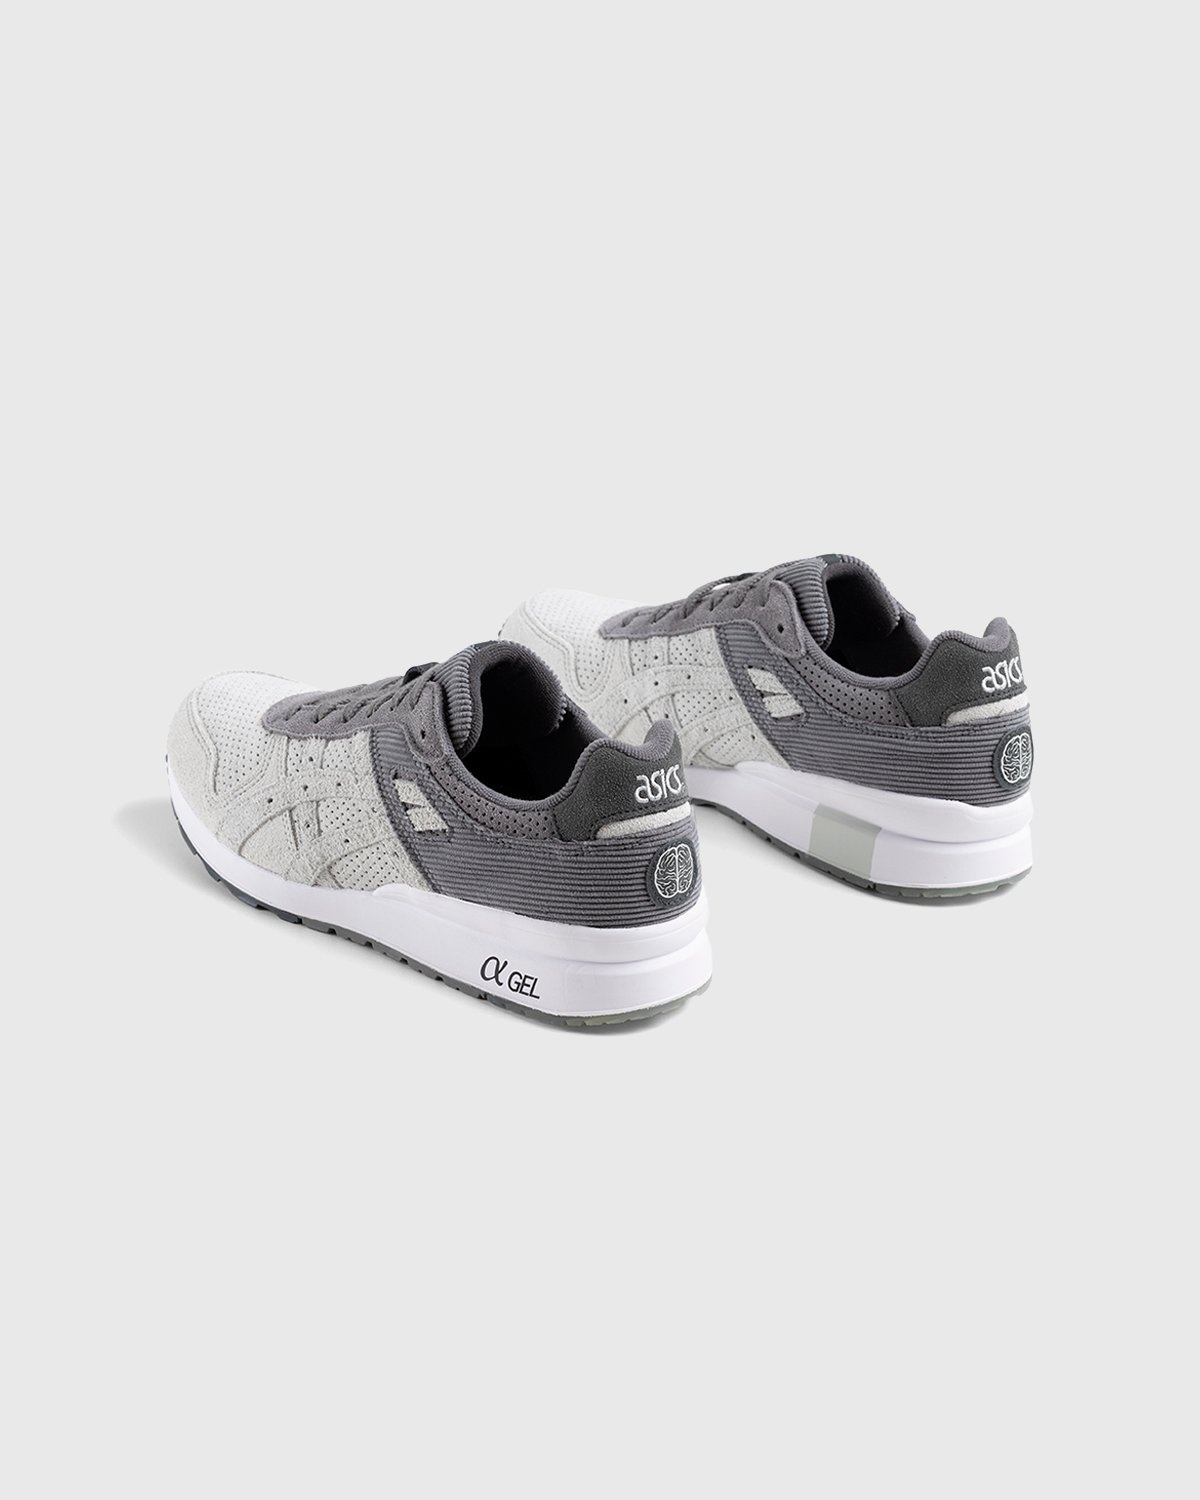 asics x Afew – GT-II Polar Shade/Carbon - Low Top Sneakers - Grey - Image 4